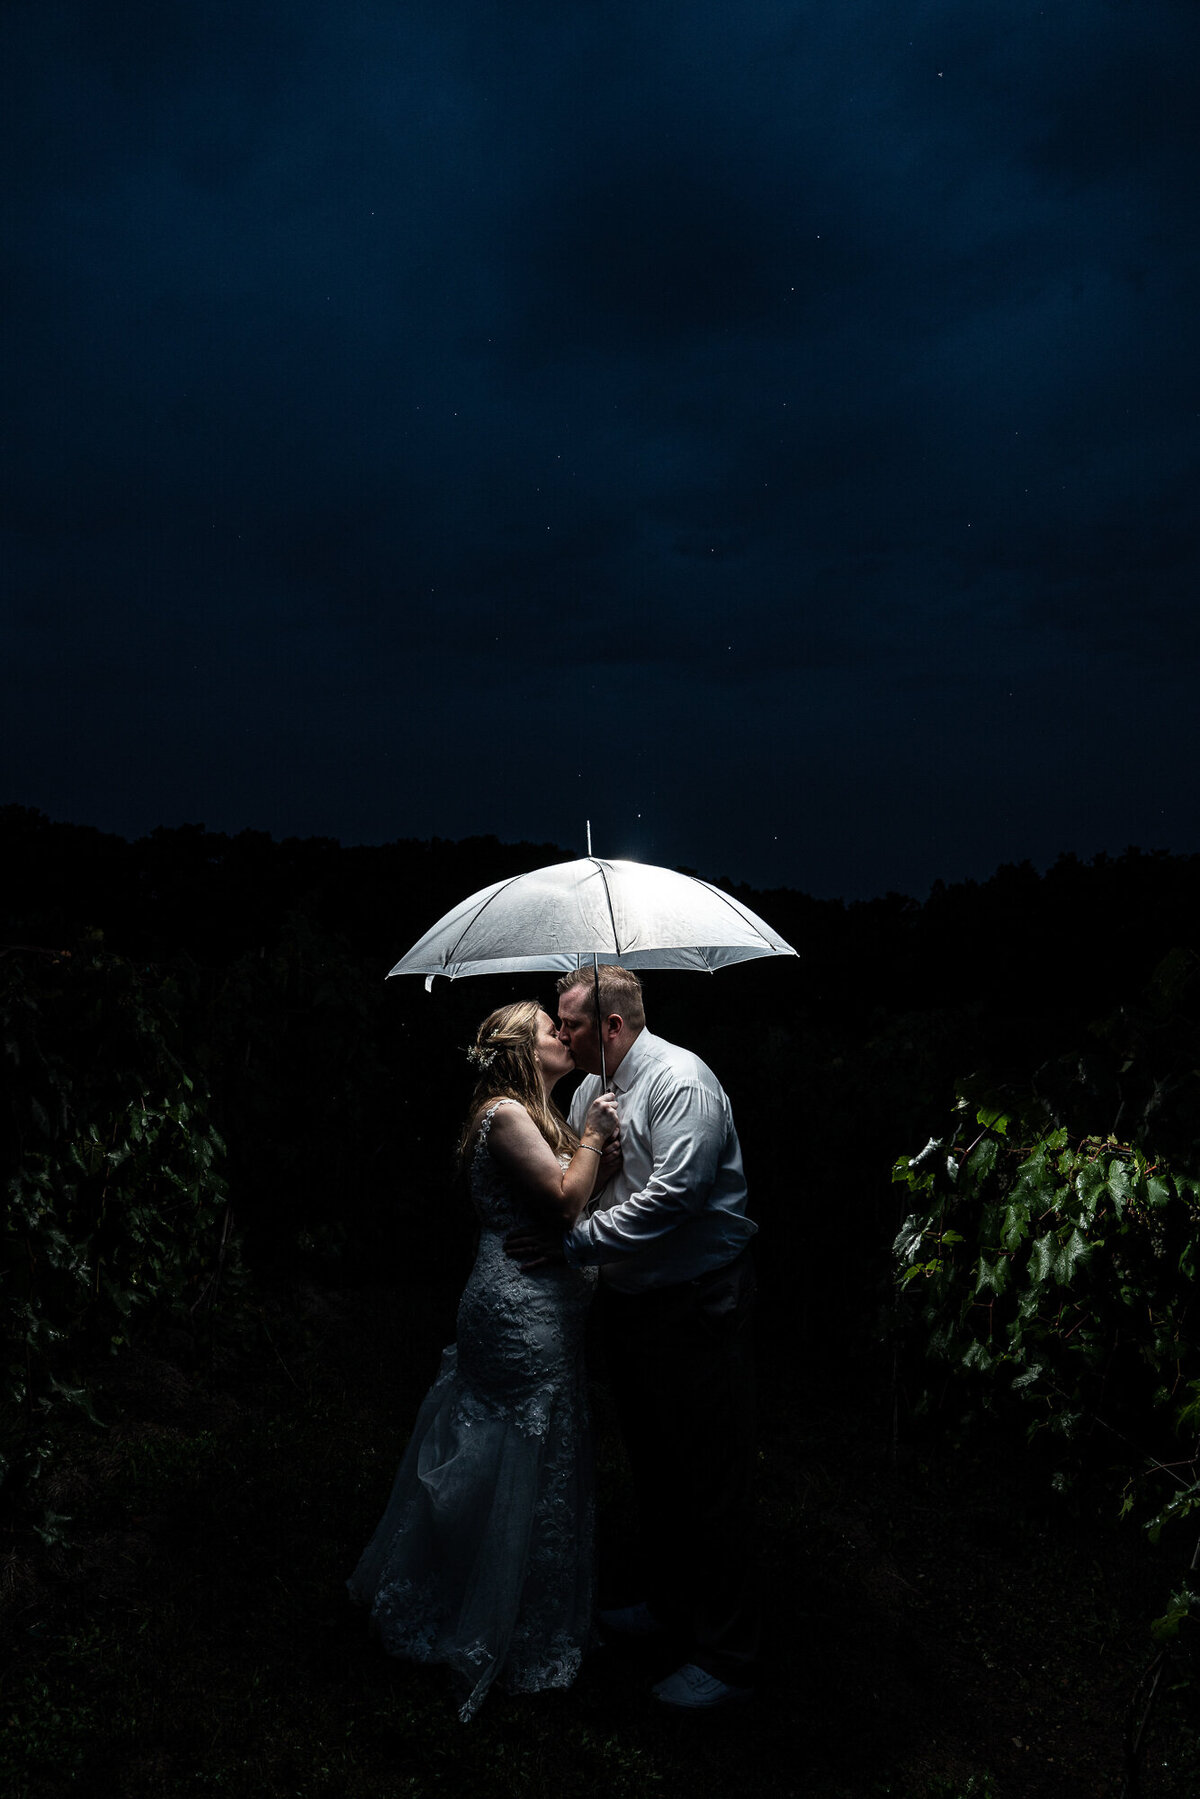 Bride and groom kiss under umbrella at night.